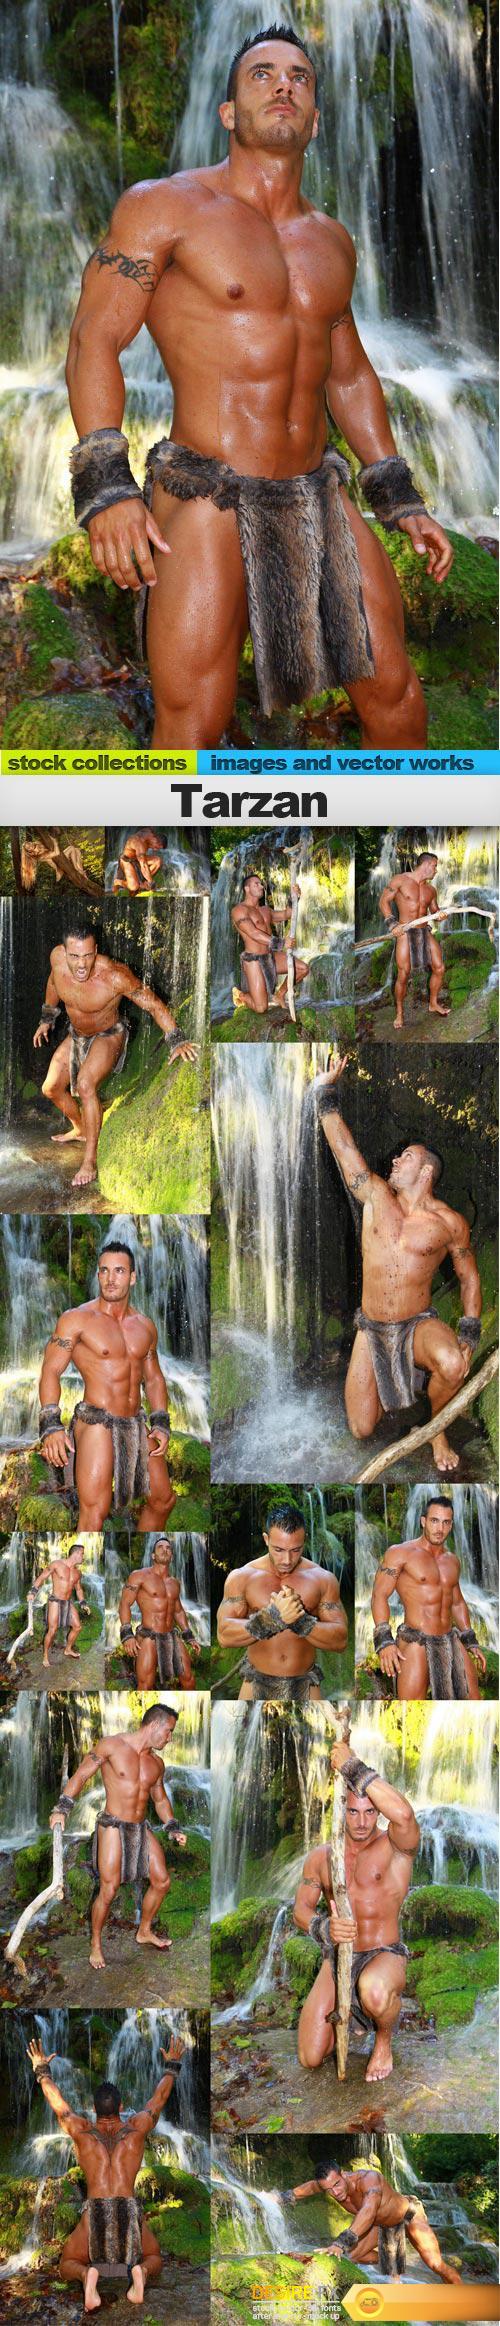 Tarzan, 15 x UHQ JPEG